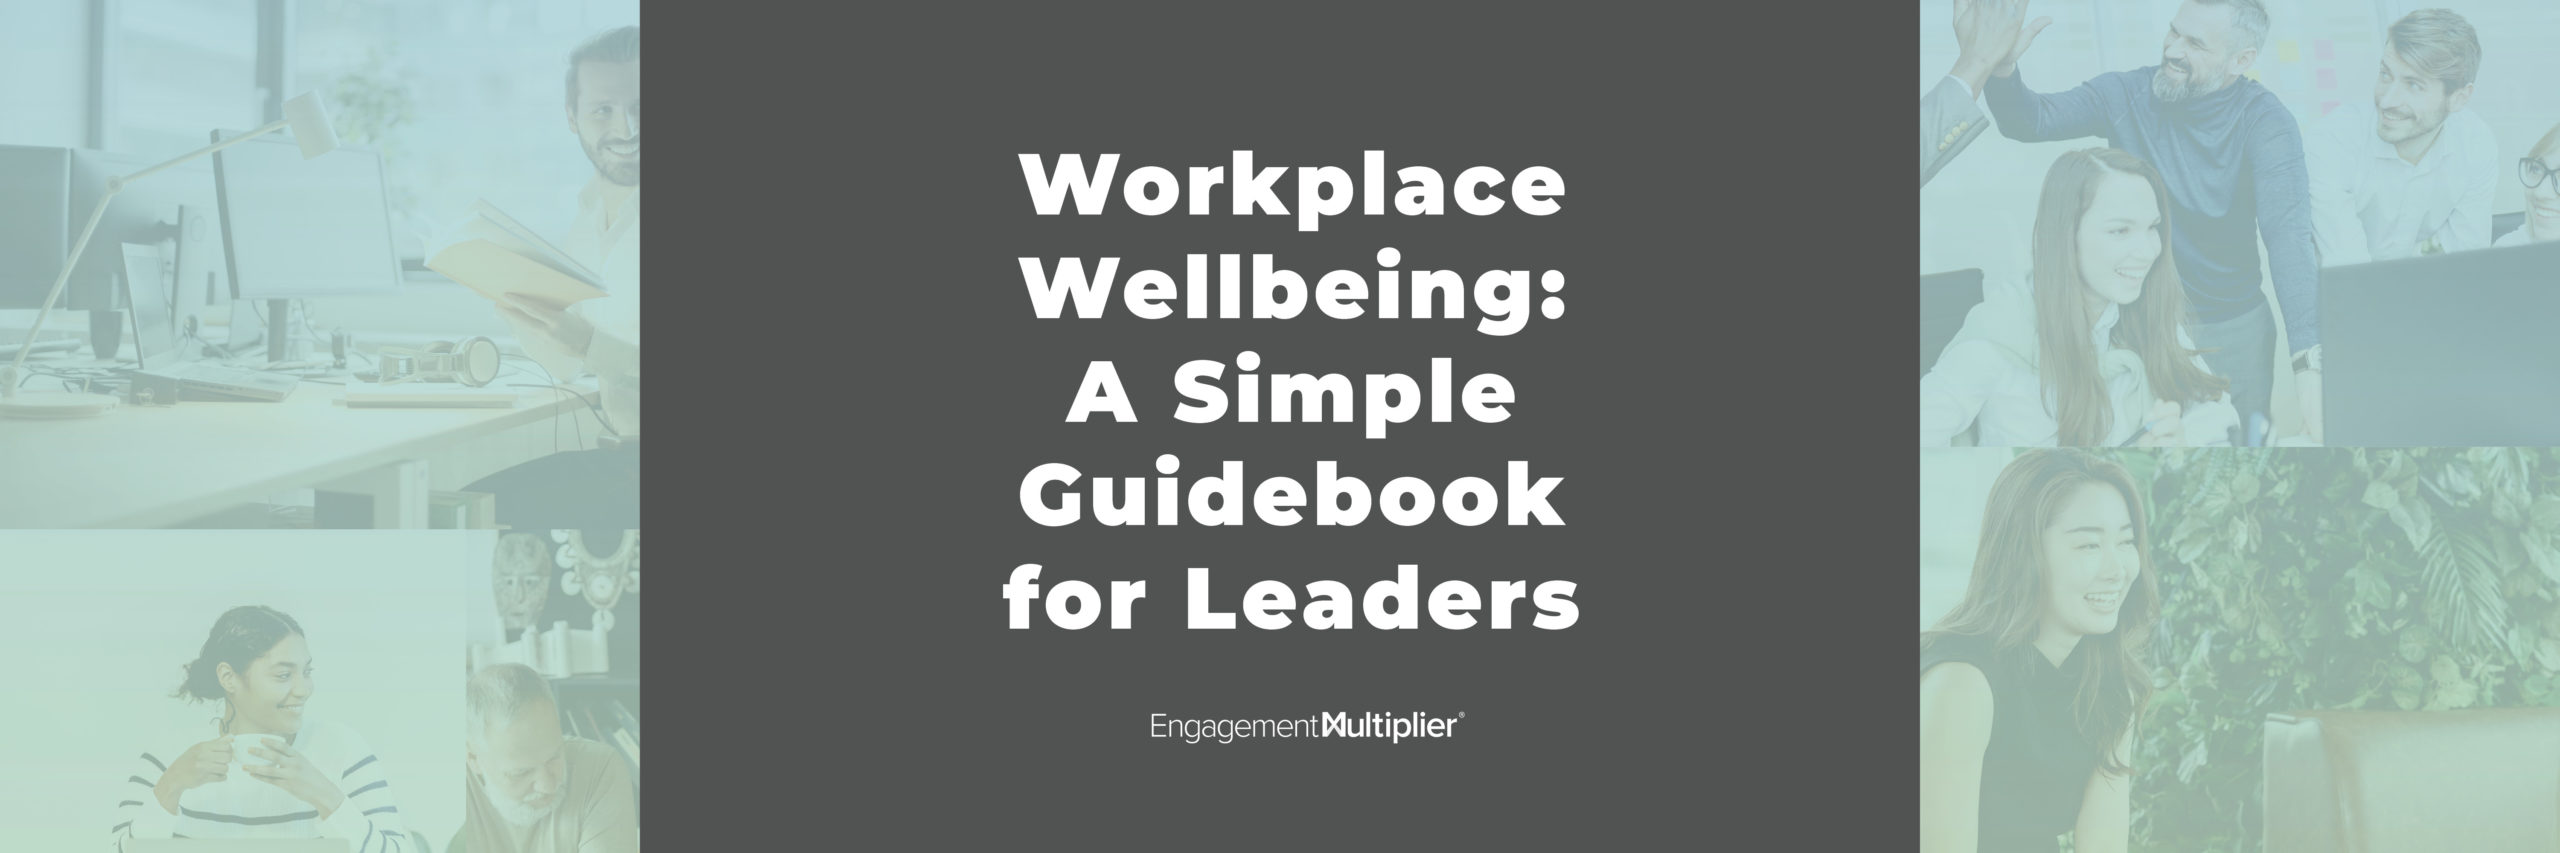 Workplace Wellbeing: A Simple Guidebook for Leaders